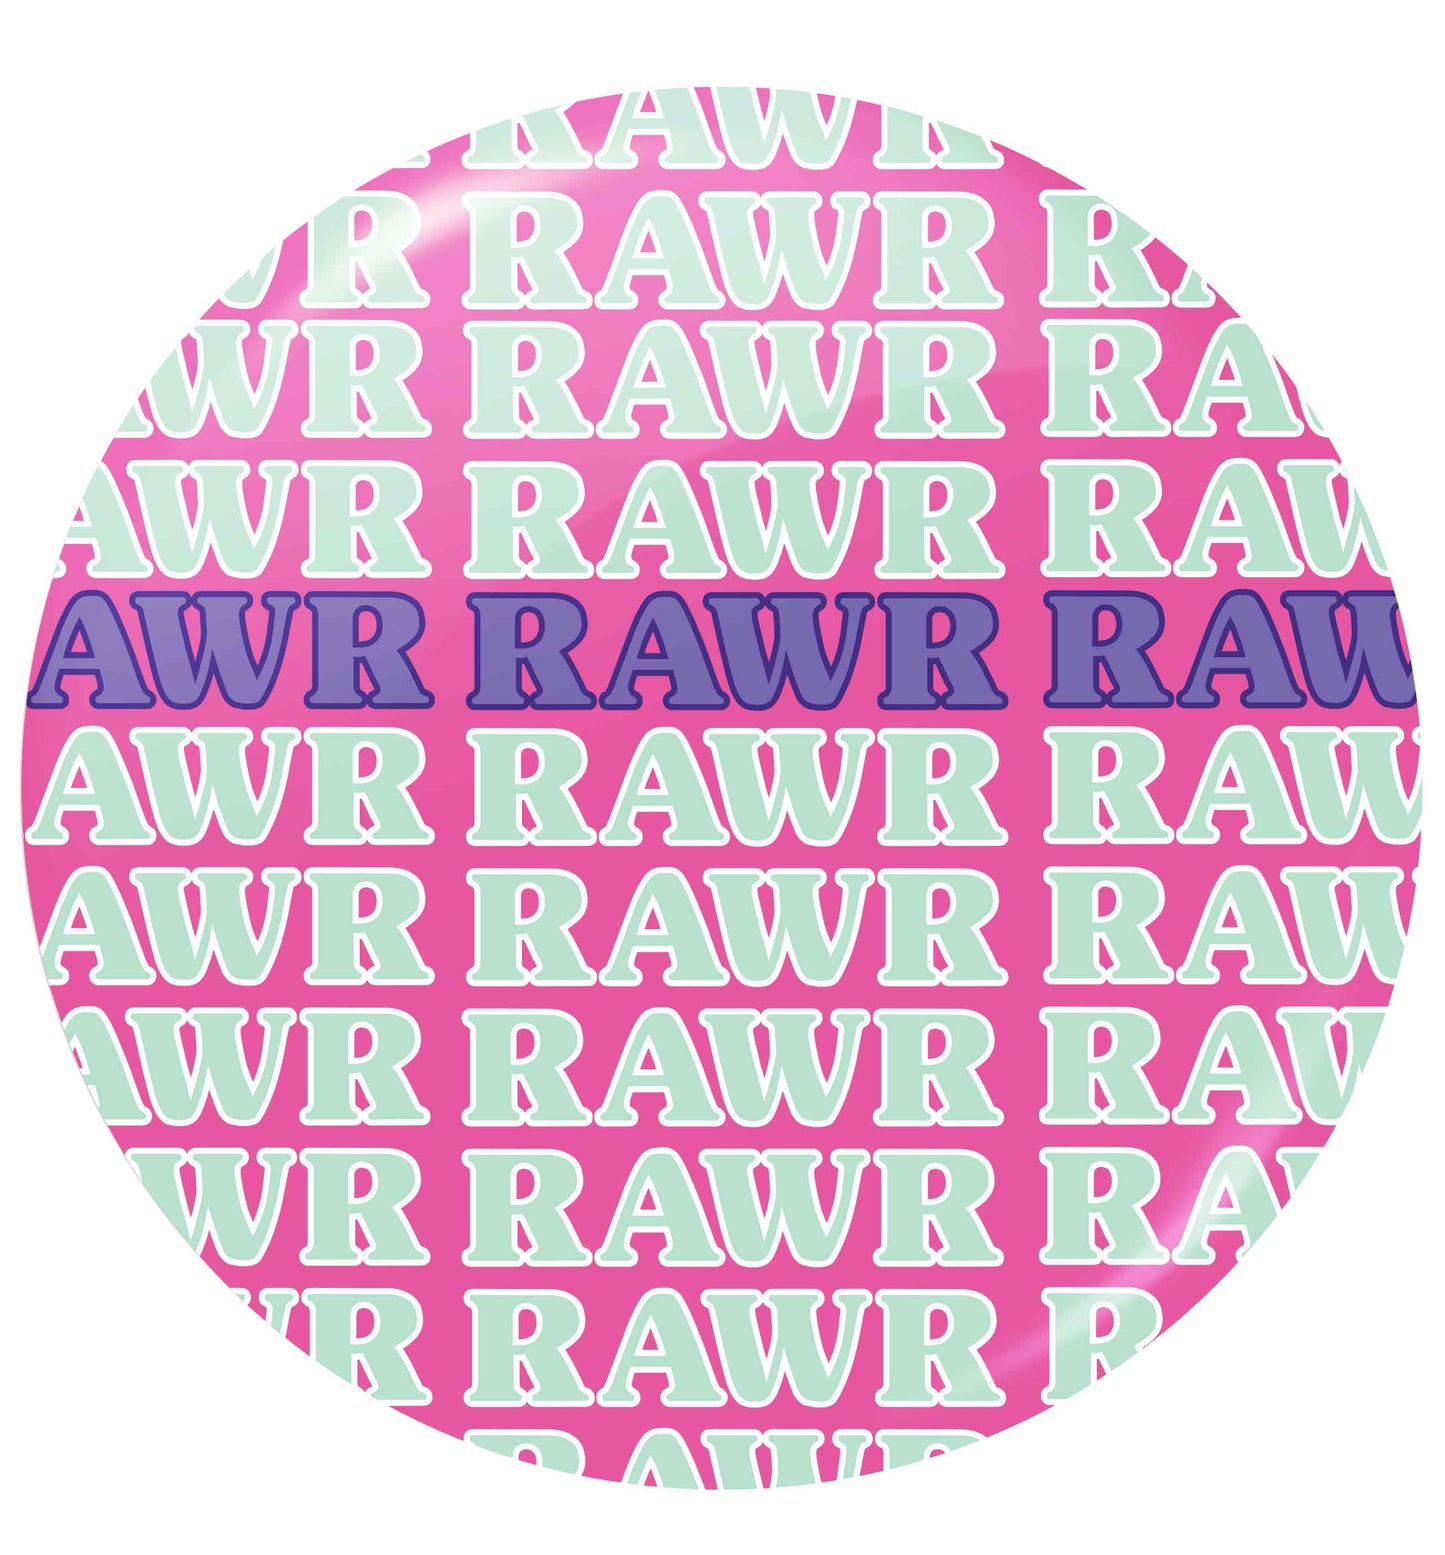 Rawr small 25mm Pin badge